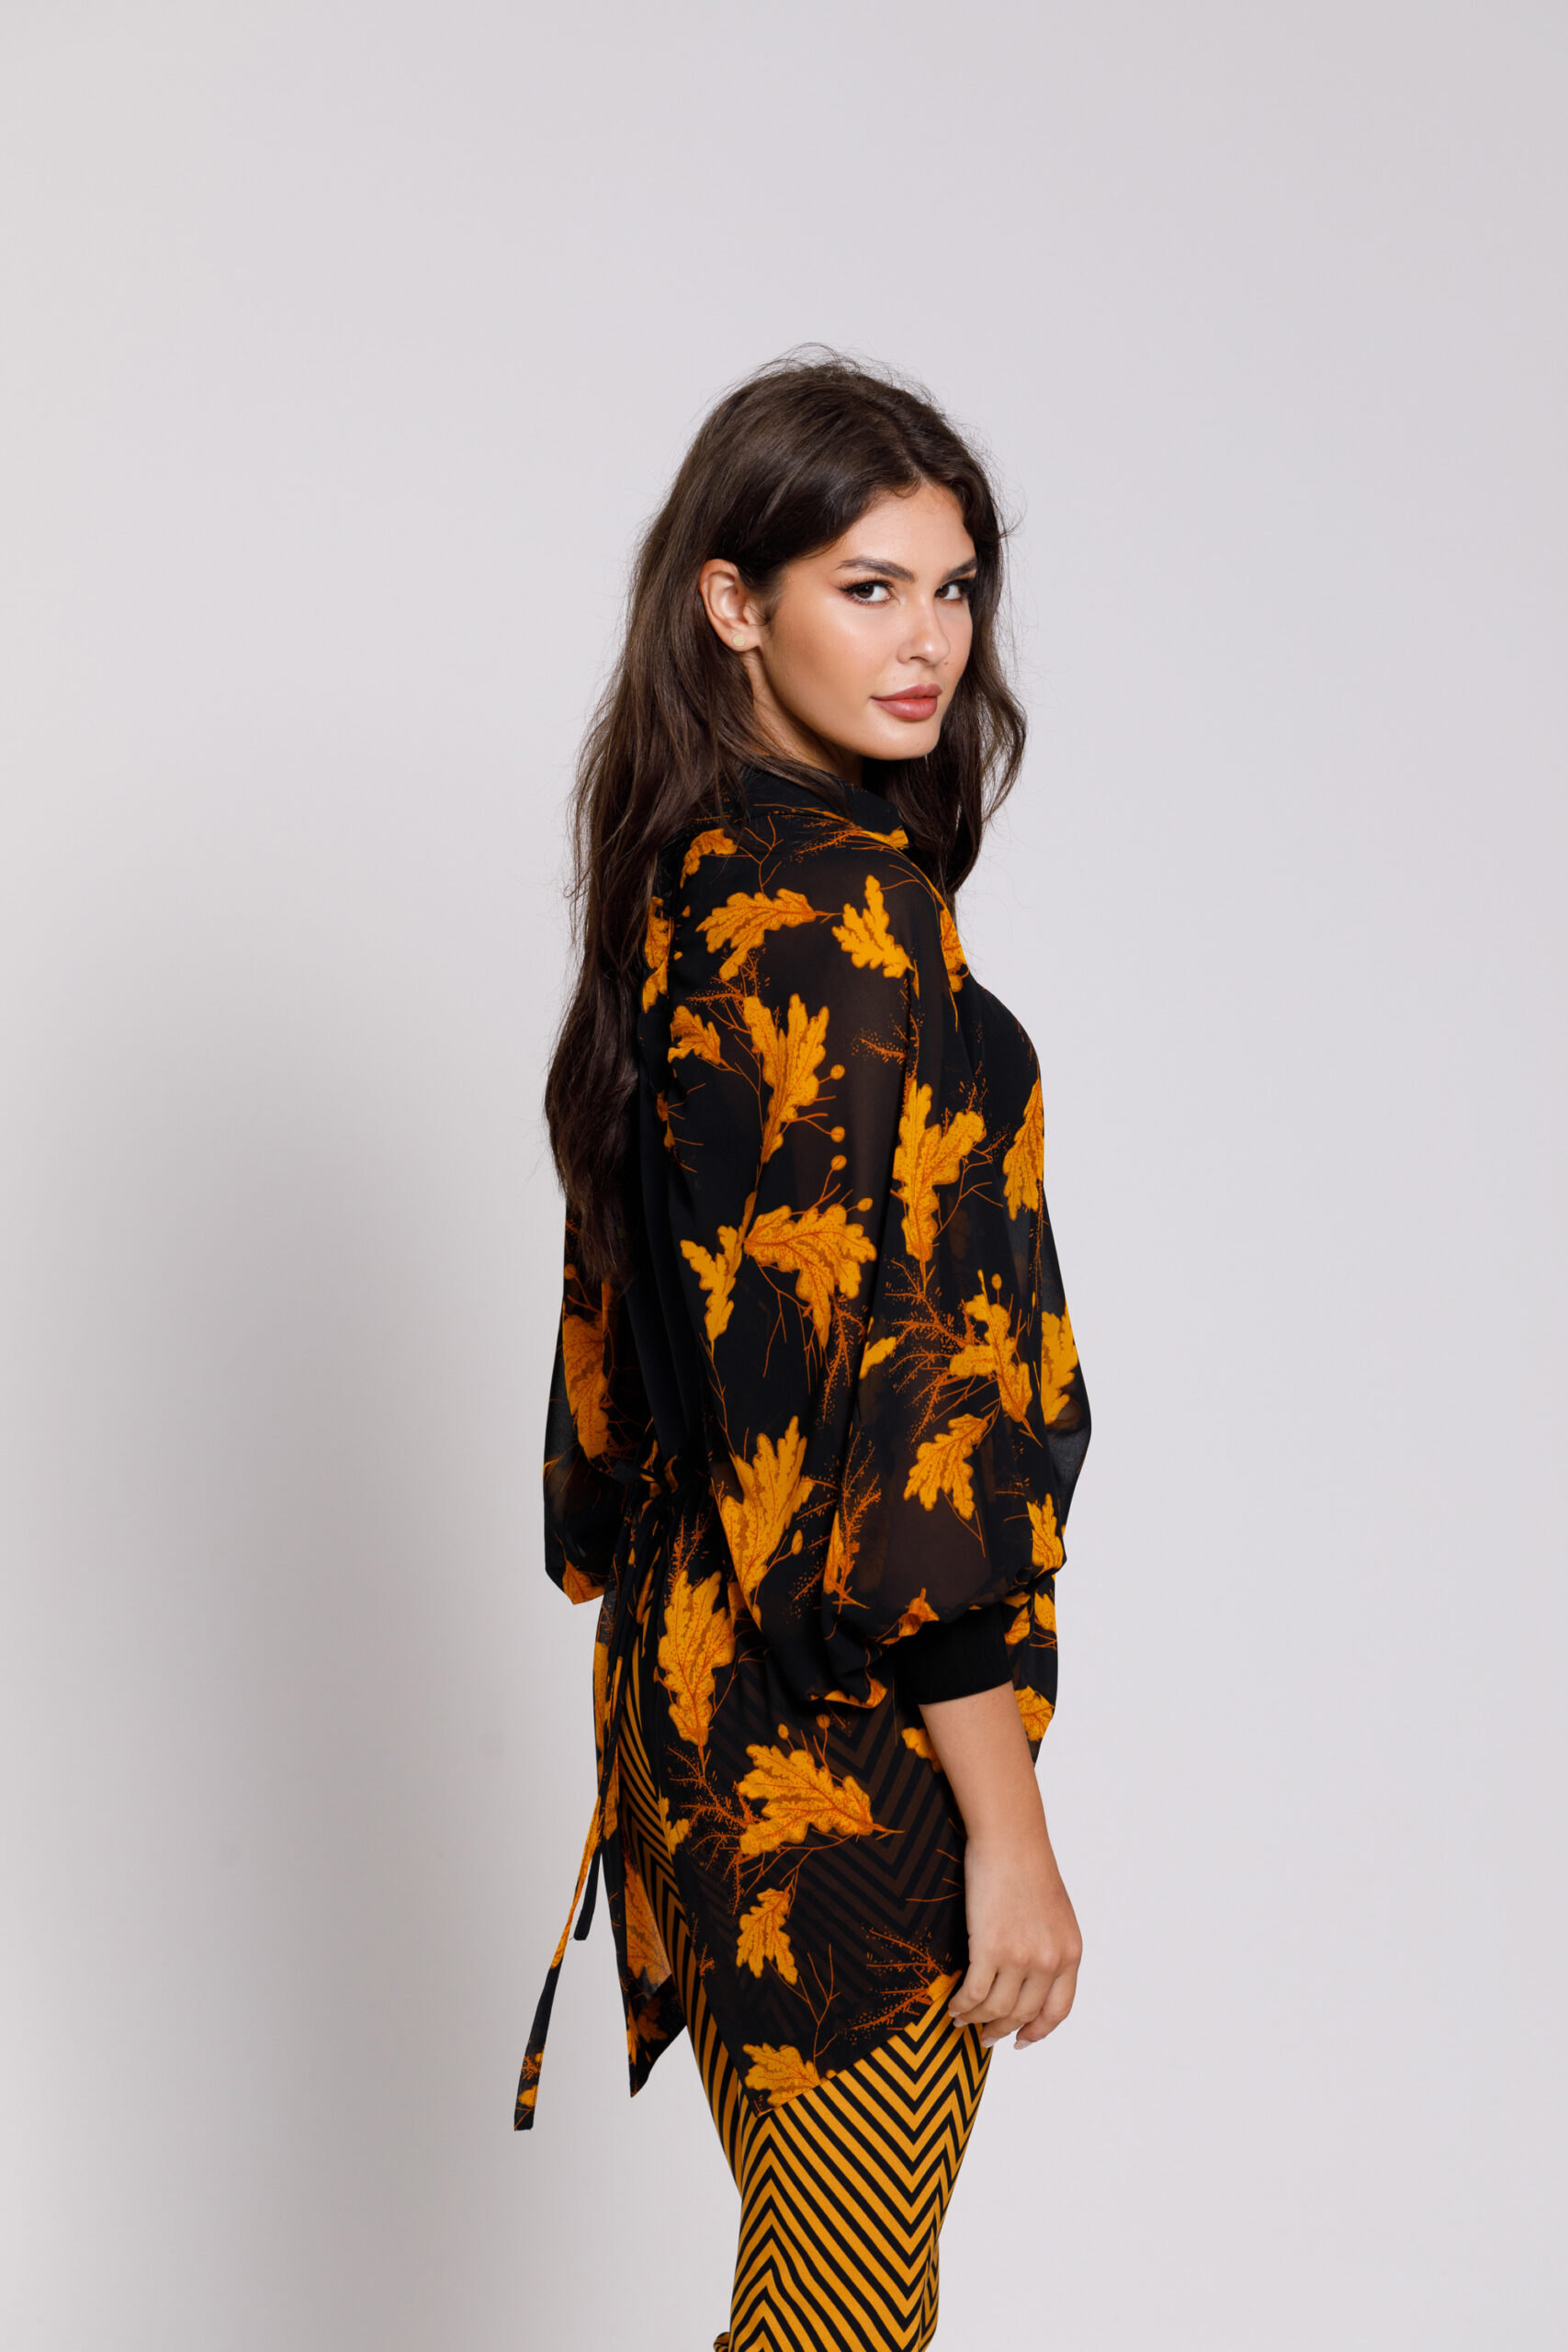 MARINA casual black veil shirt with yellow leaves. Natural fabrics, original design, handmade embroidery